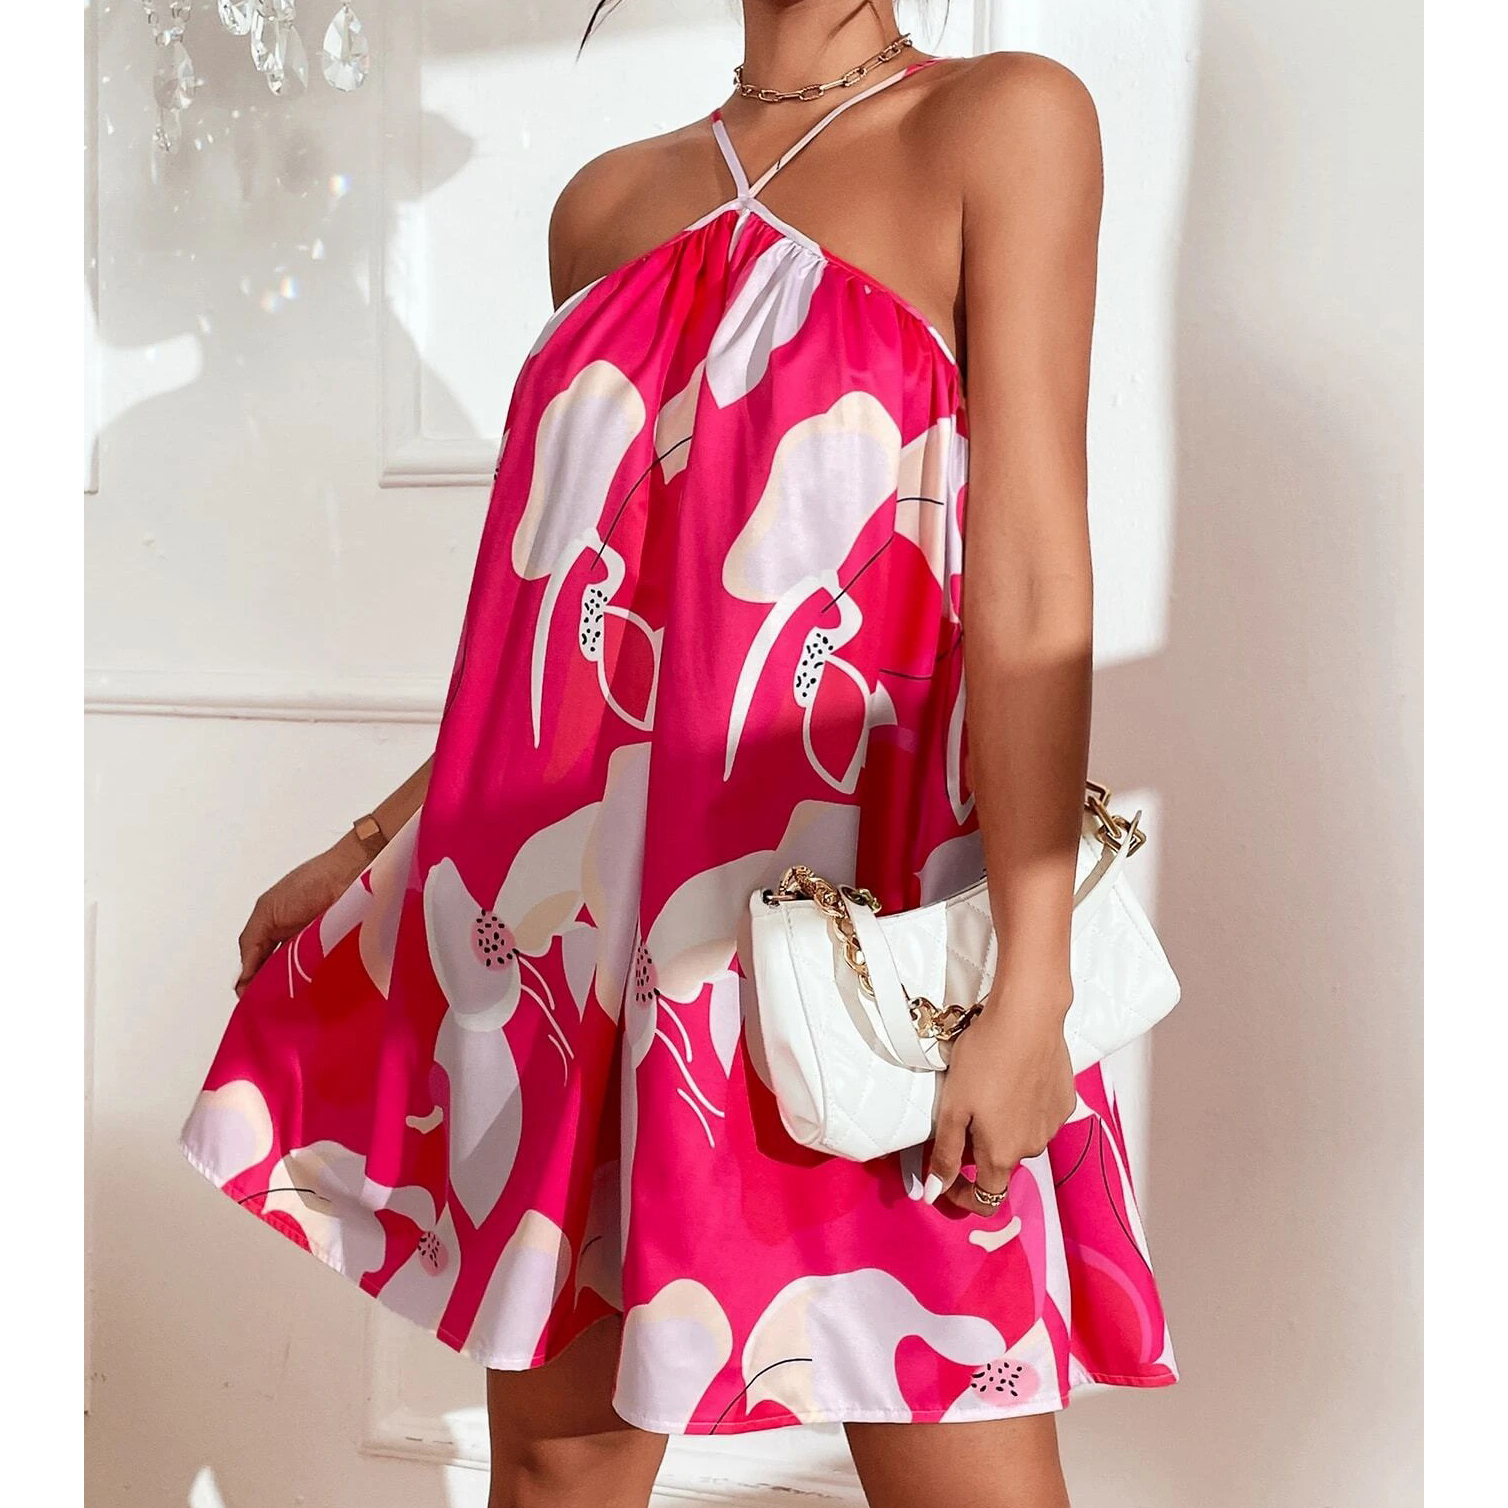 Allover Print Cami Dress - Hot Pink, Large(8/10)